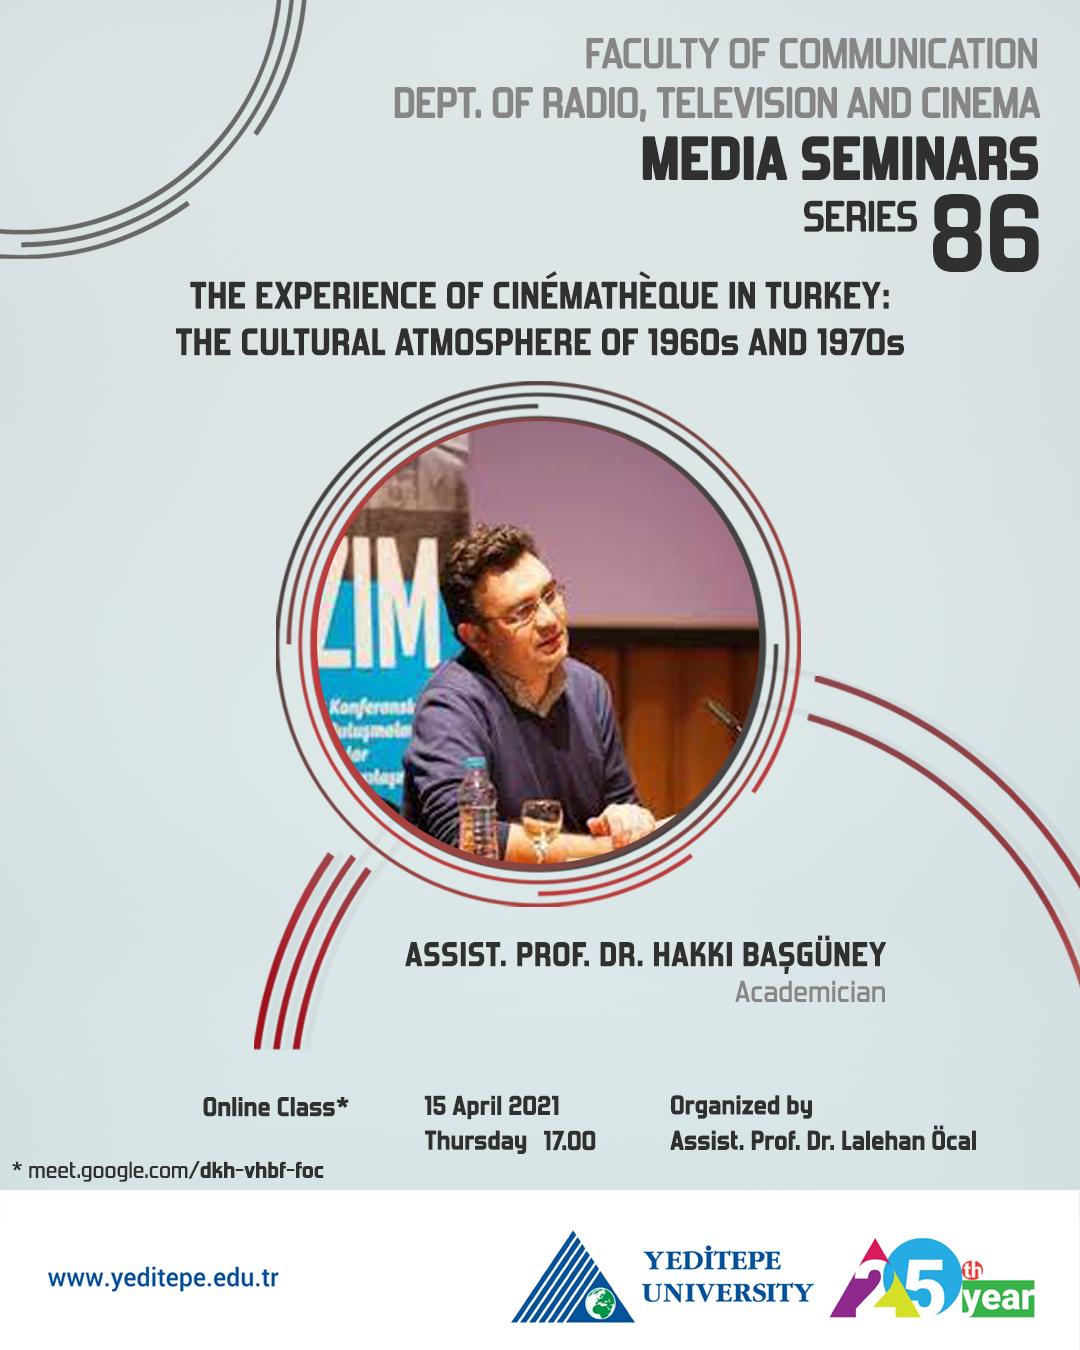 Department of Radio, Television and Cinema Media Seminars Series 86